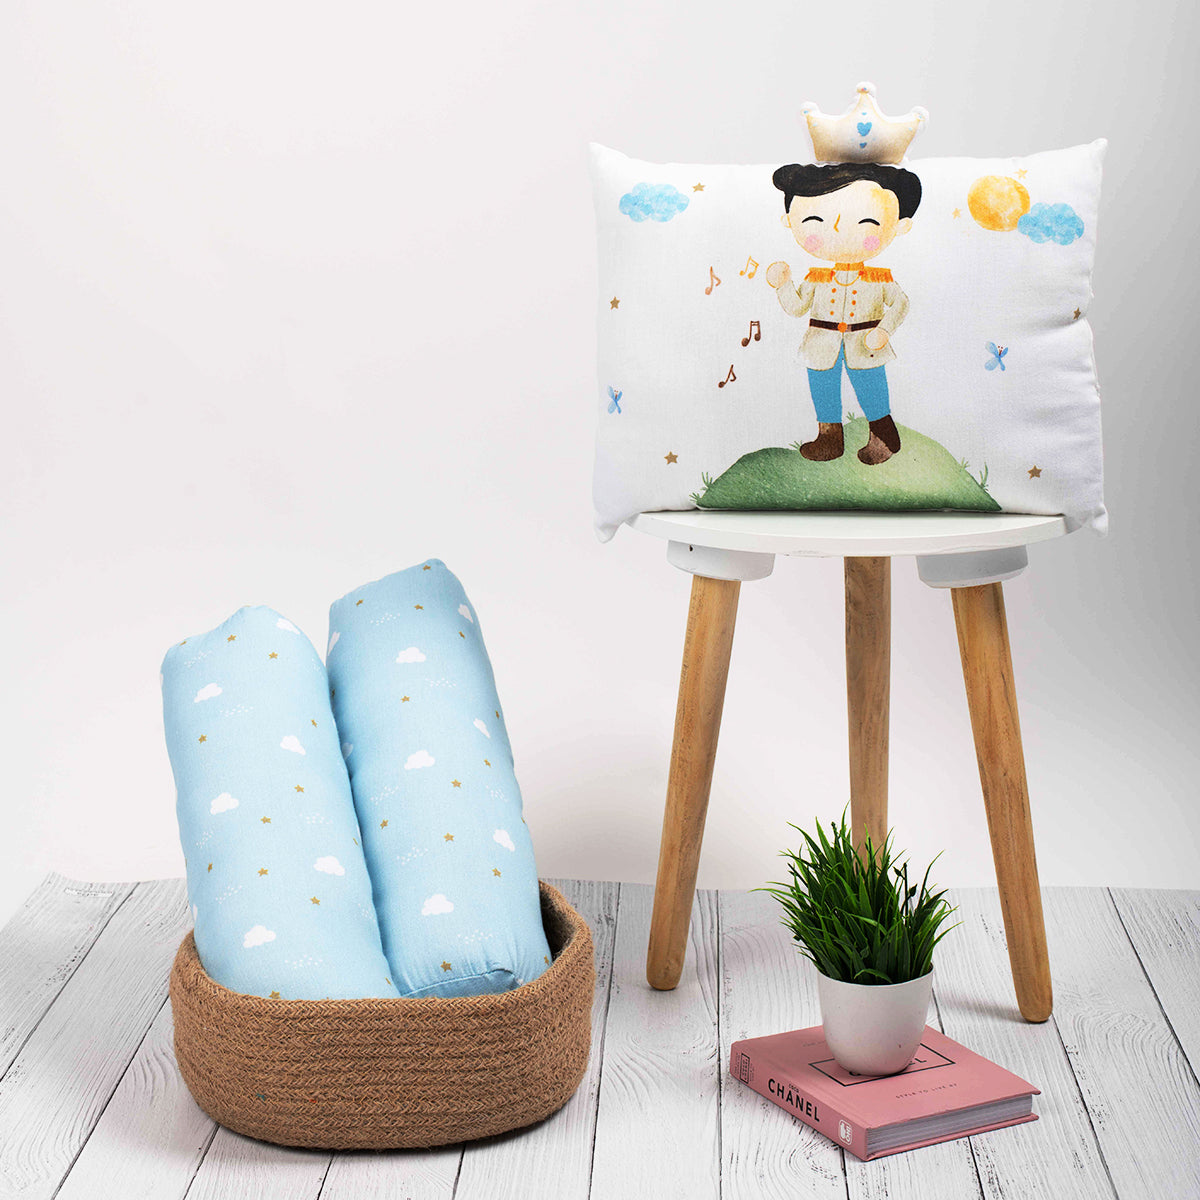 Tiny snooze mini cot set – the little prince